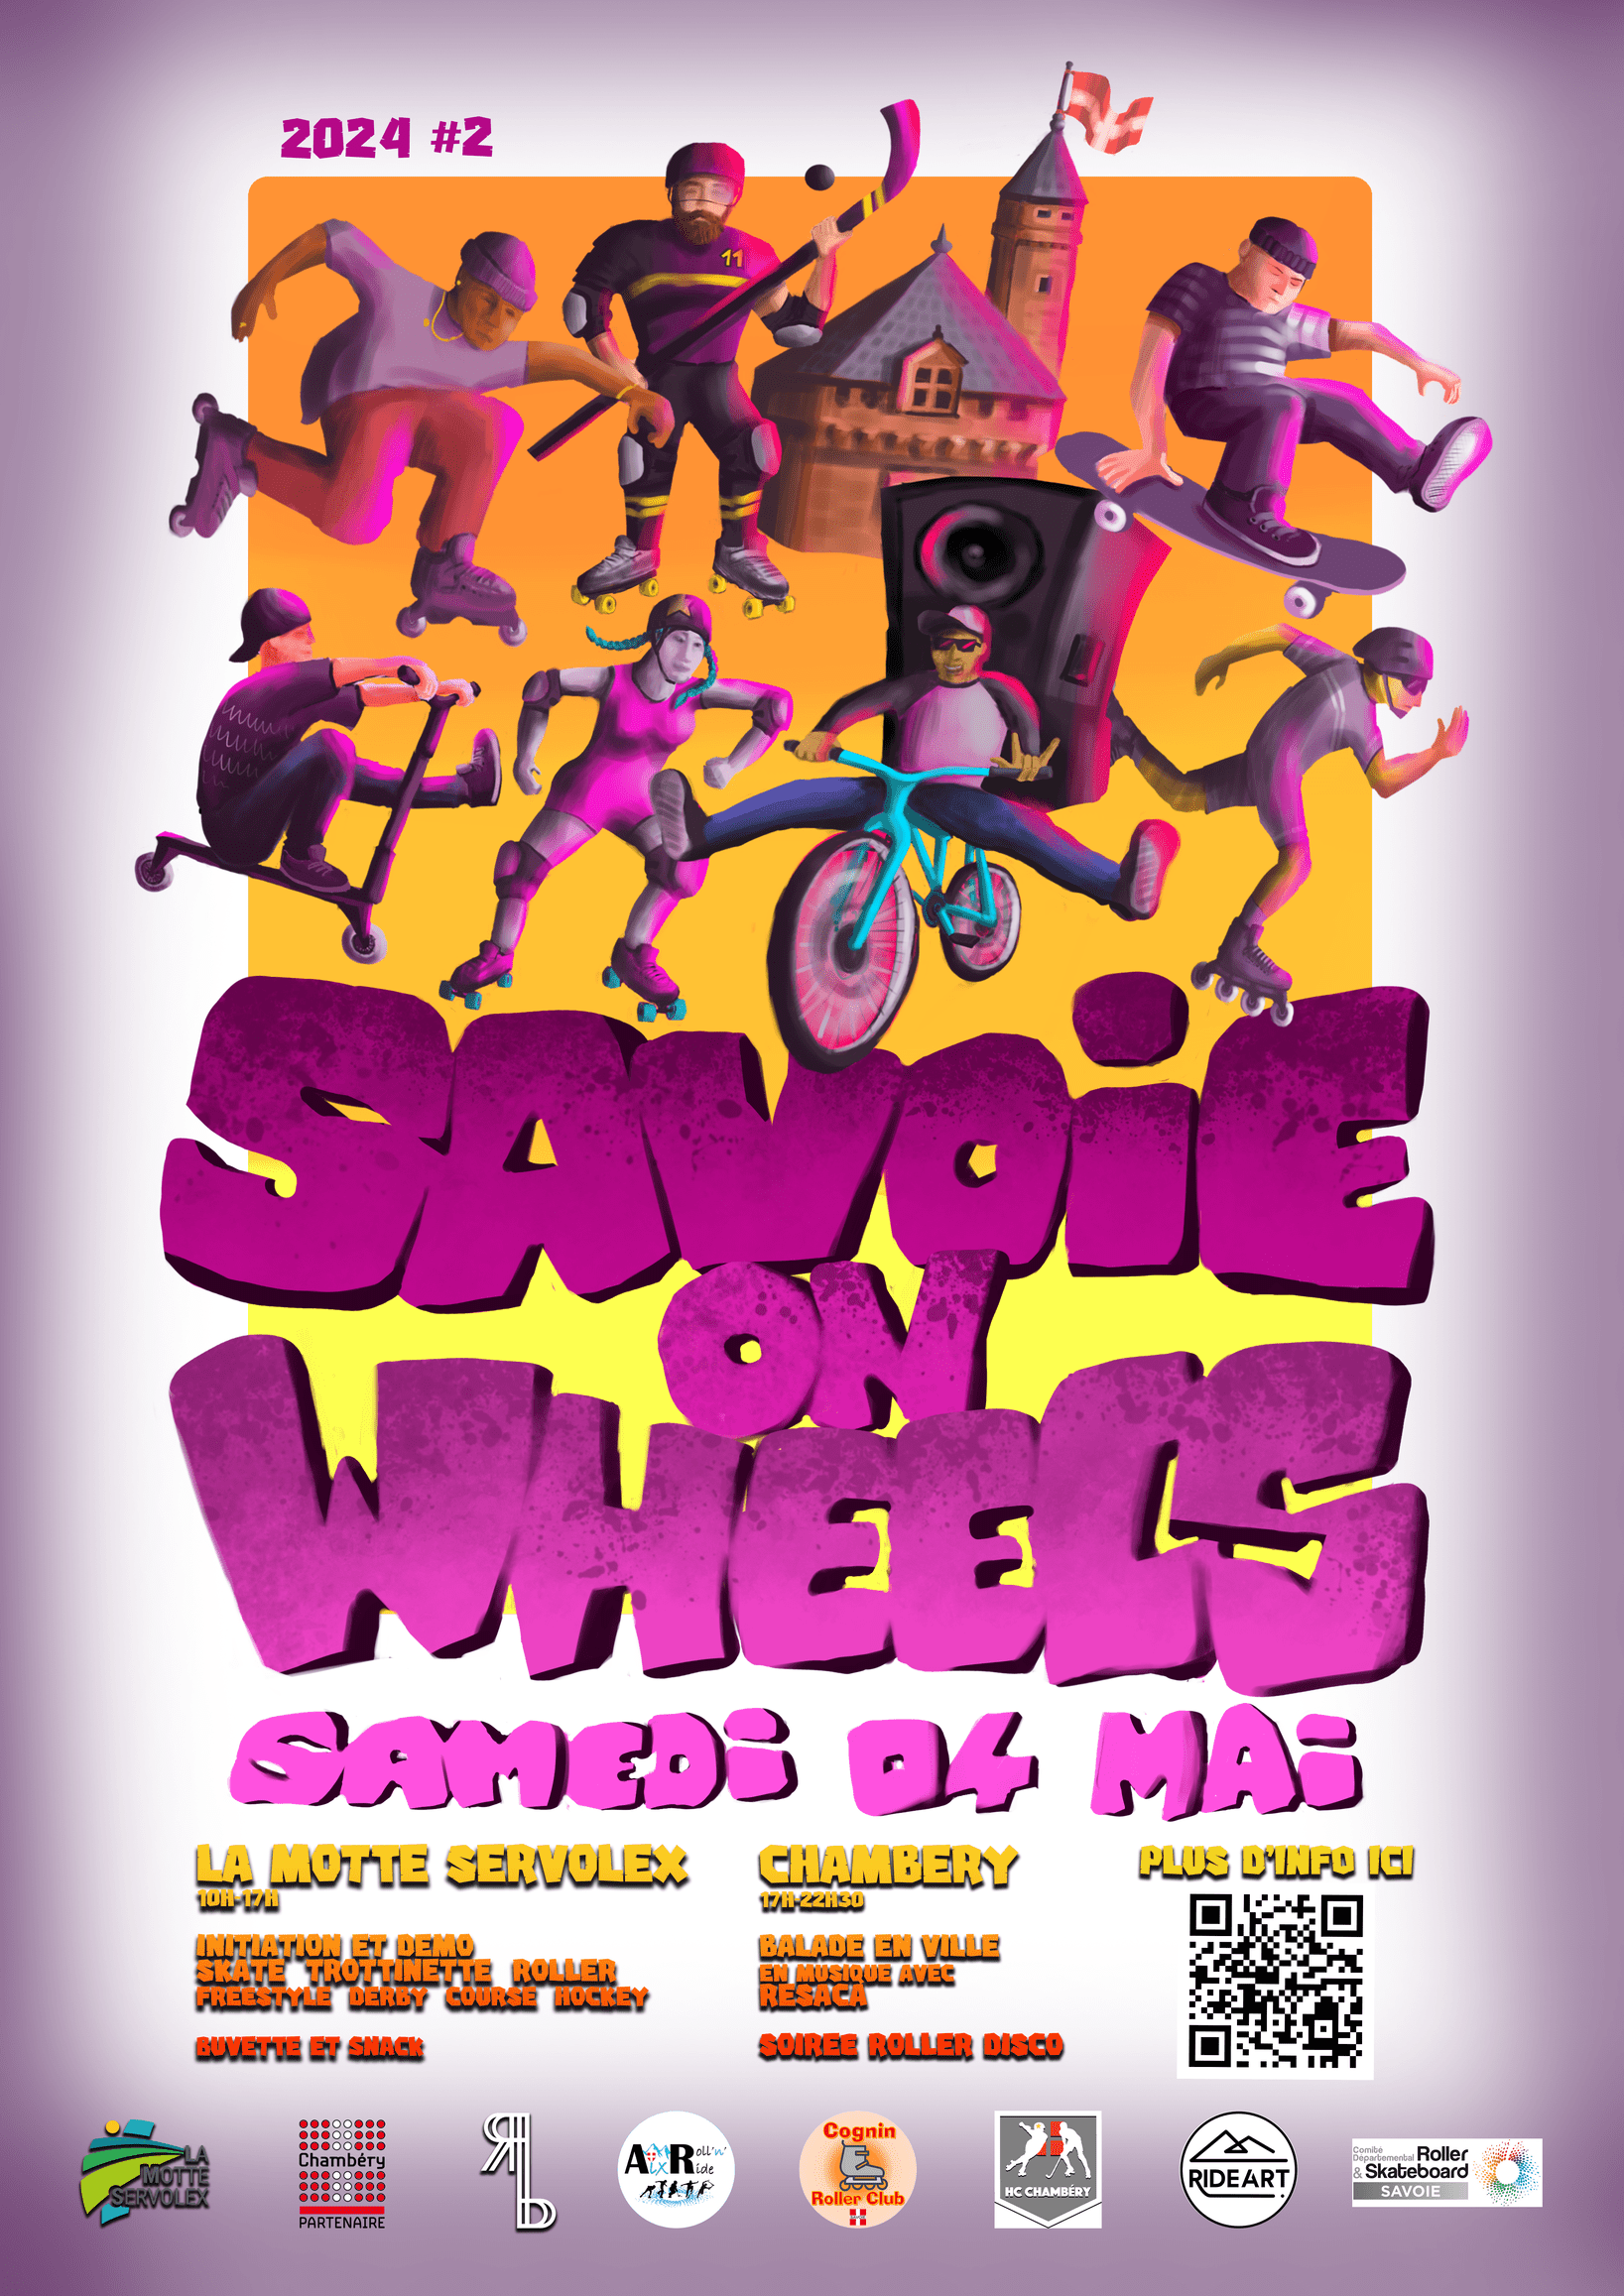 Savoie On Wheels 2024 #2 - Festival de la Glisse Urbaine & Roller Disco